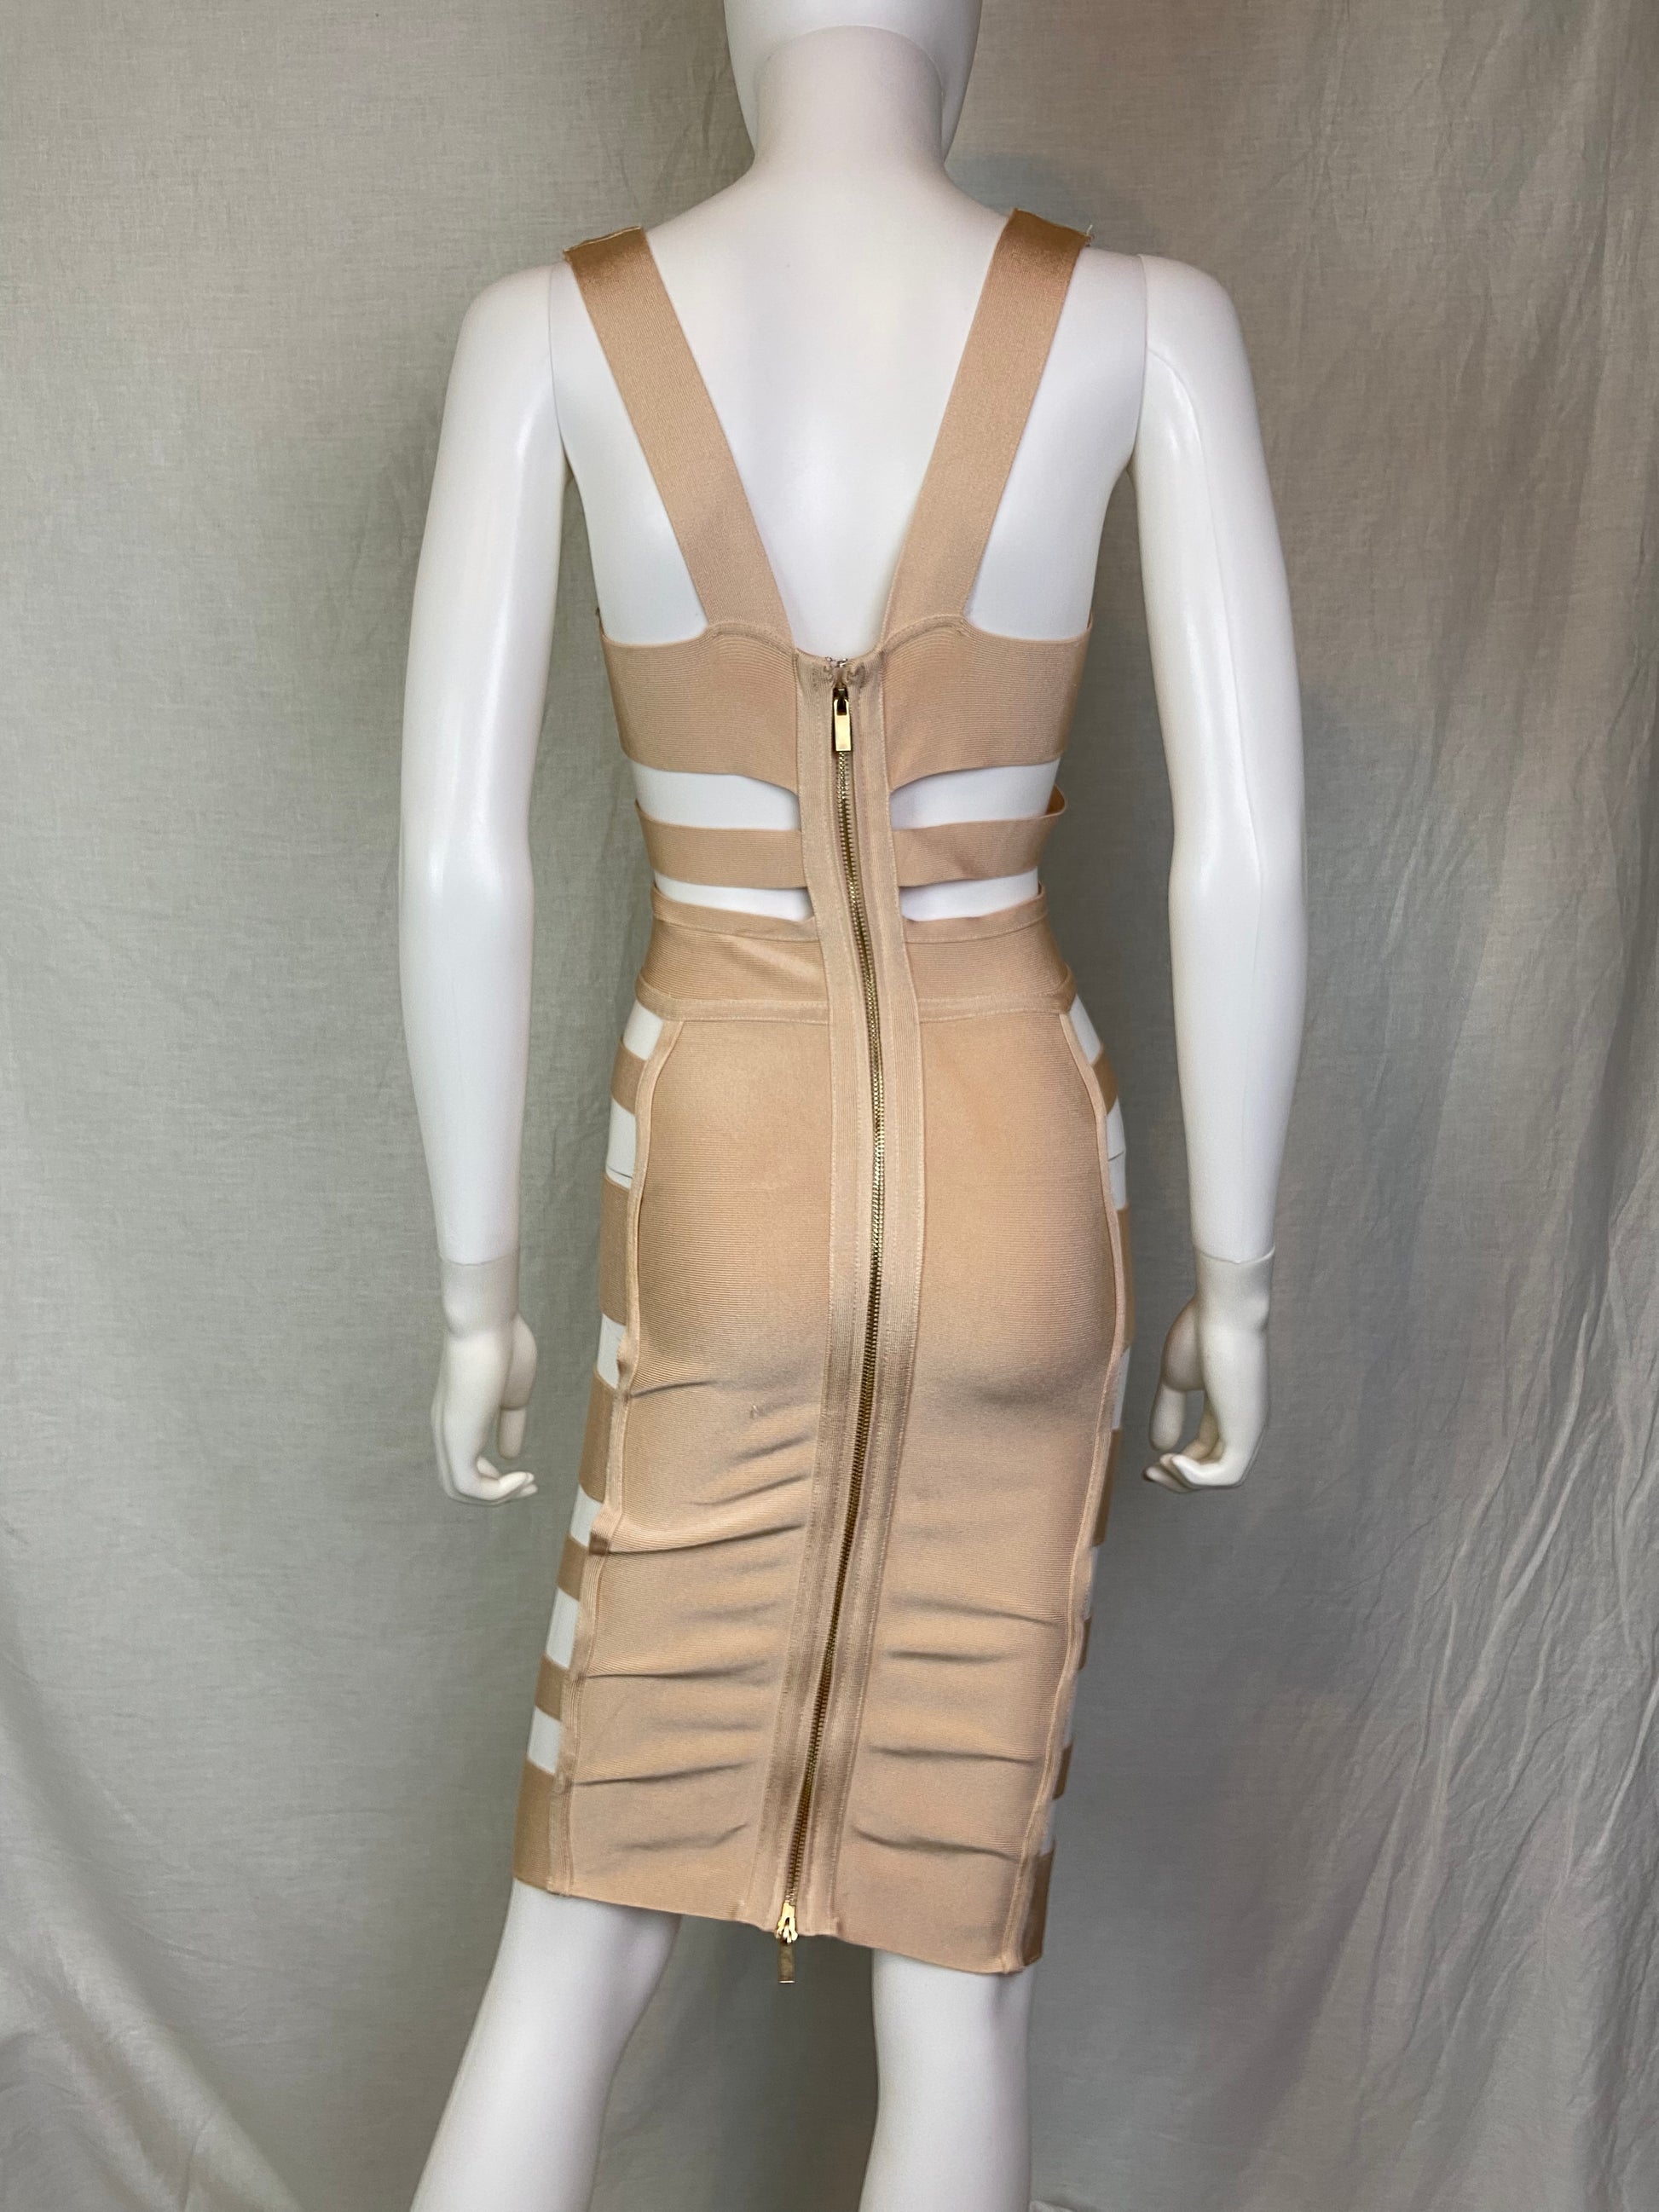 Herve Leger style Beige Plunge Cut Out Bandage Mini Dress ABBY ESSIE STUDIOS